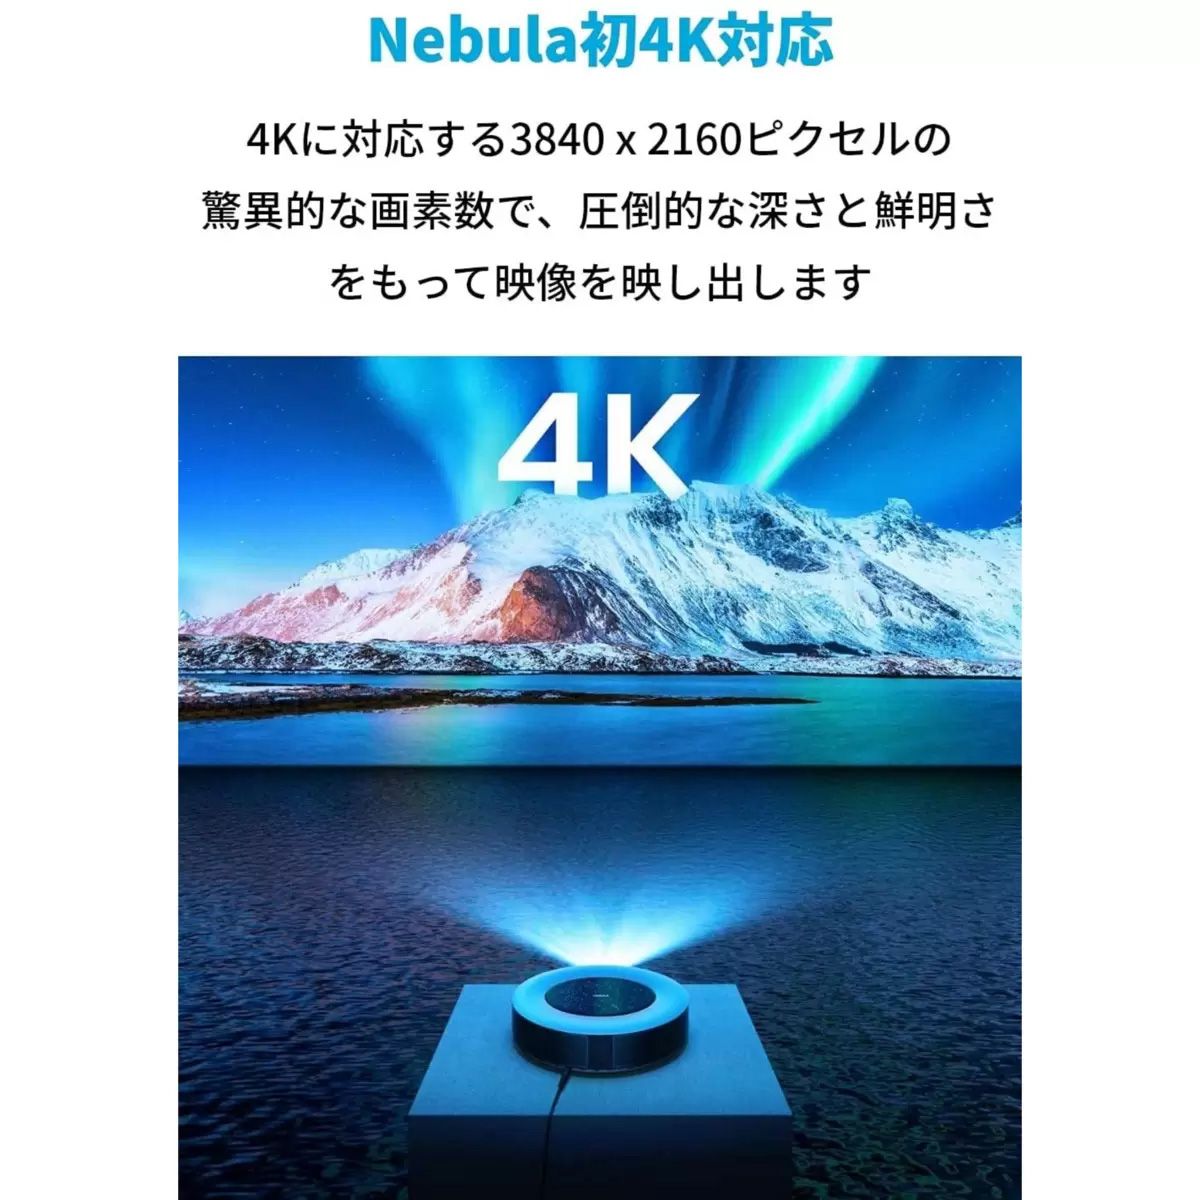 Anker NebulaCosmos max 4K投影機產品介紹